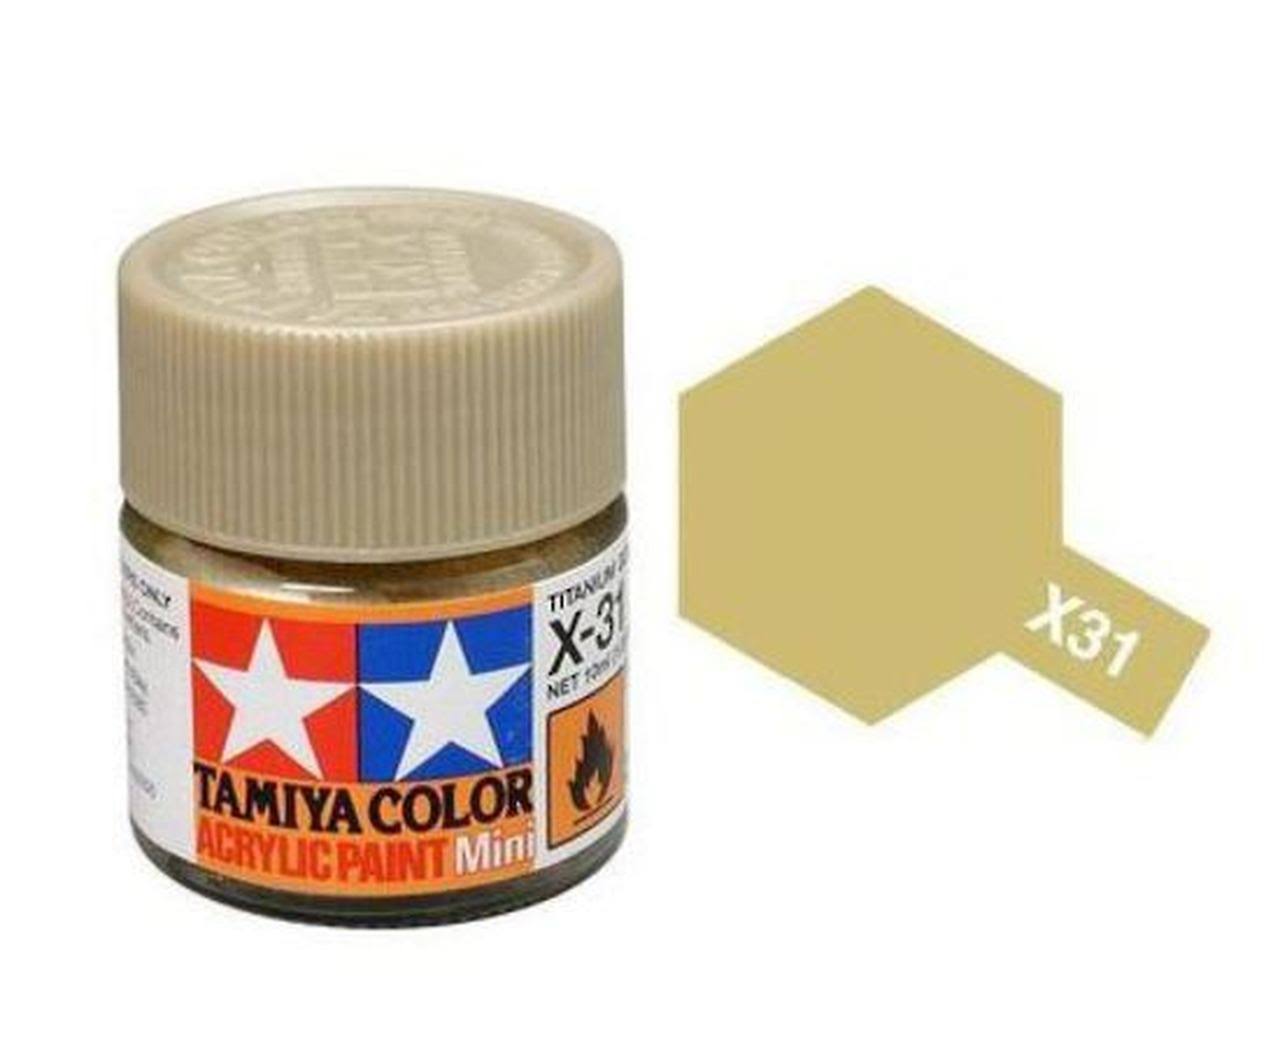 Tamiya - X-31 Acrylic Mini Titan Gold